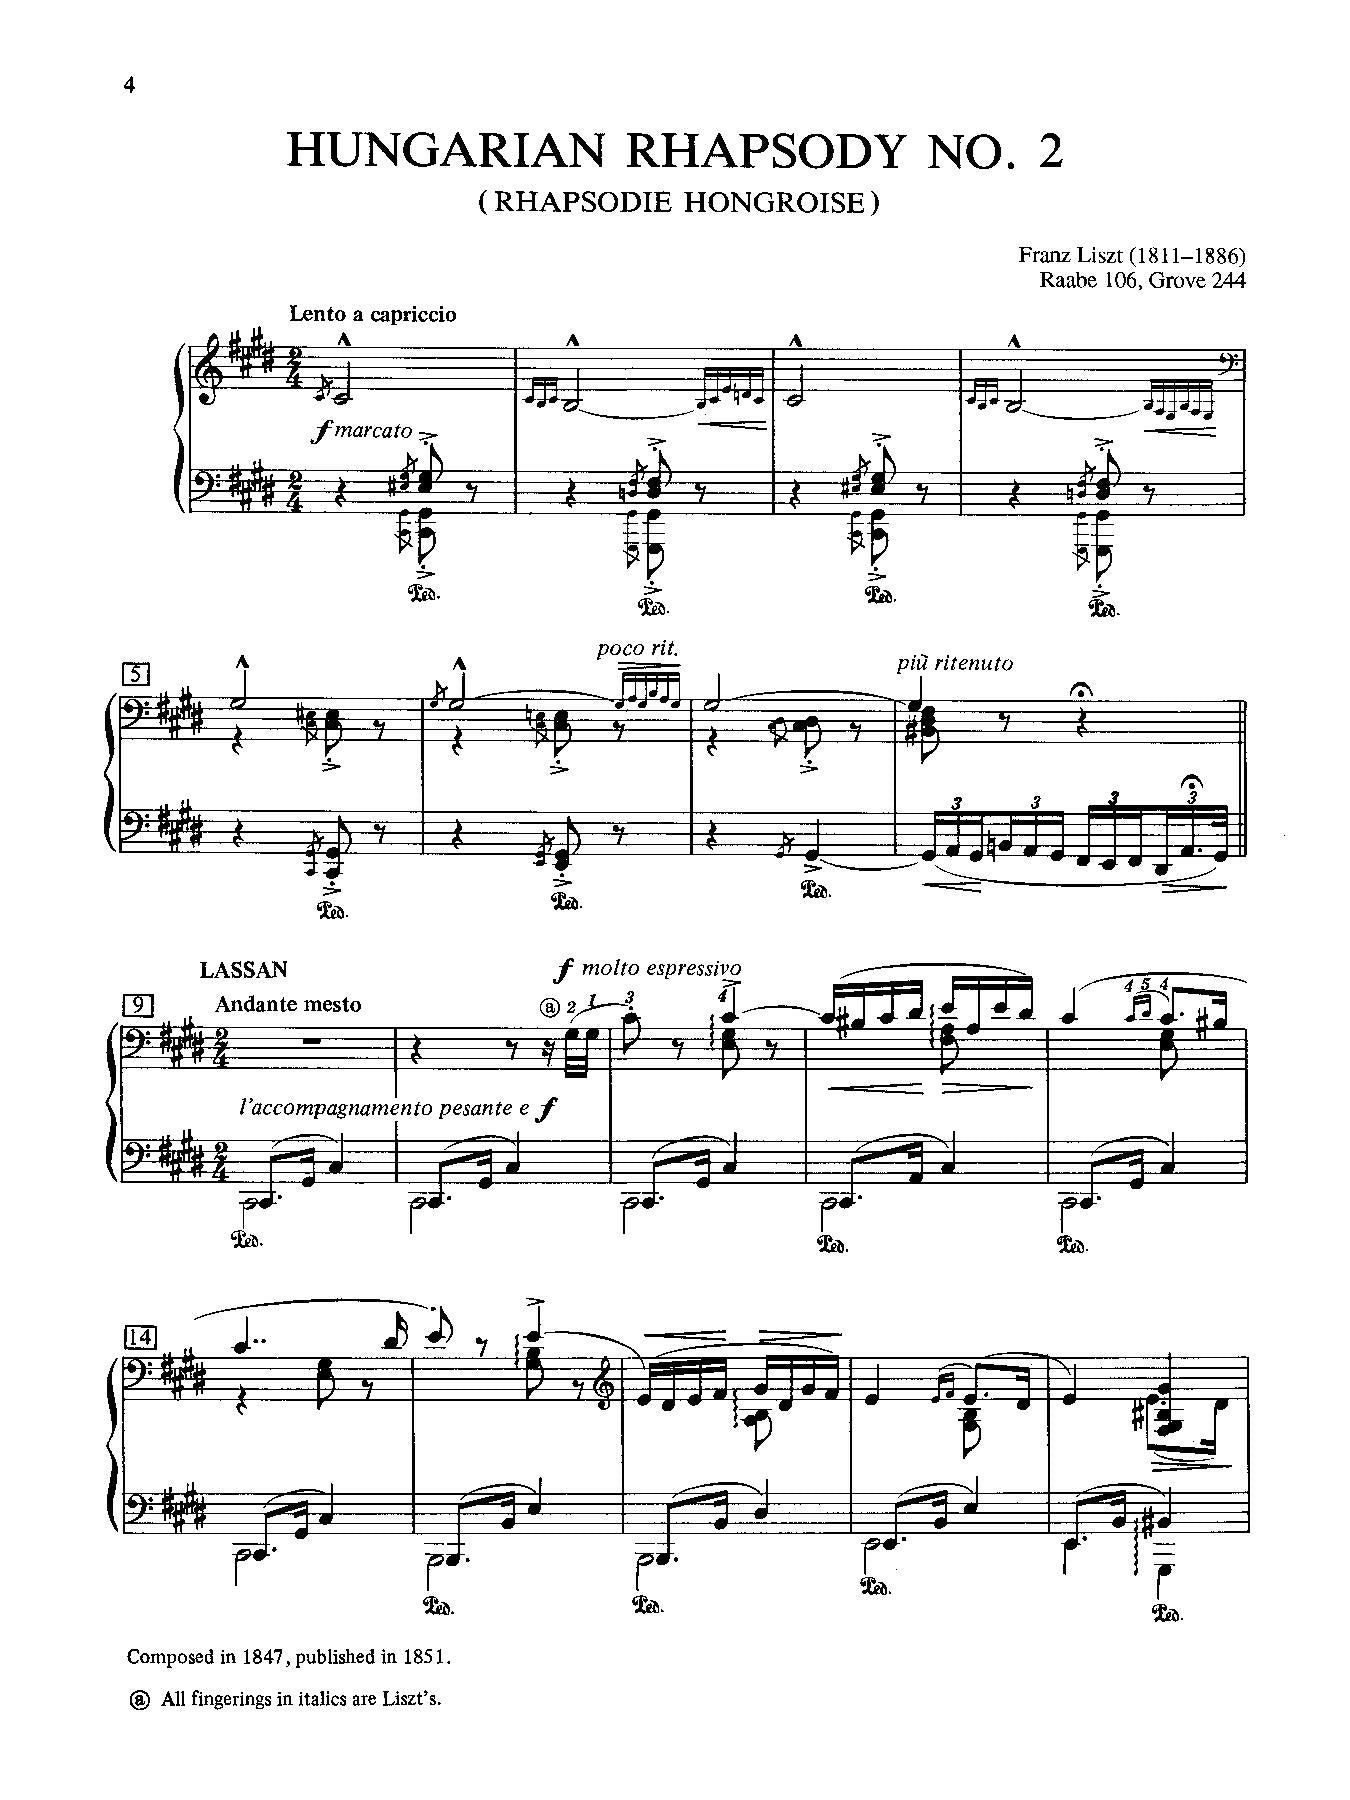 Liszt: Hungarian Rhapsody, No. 2